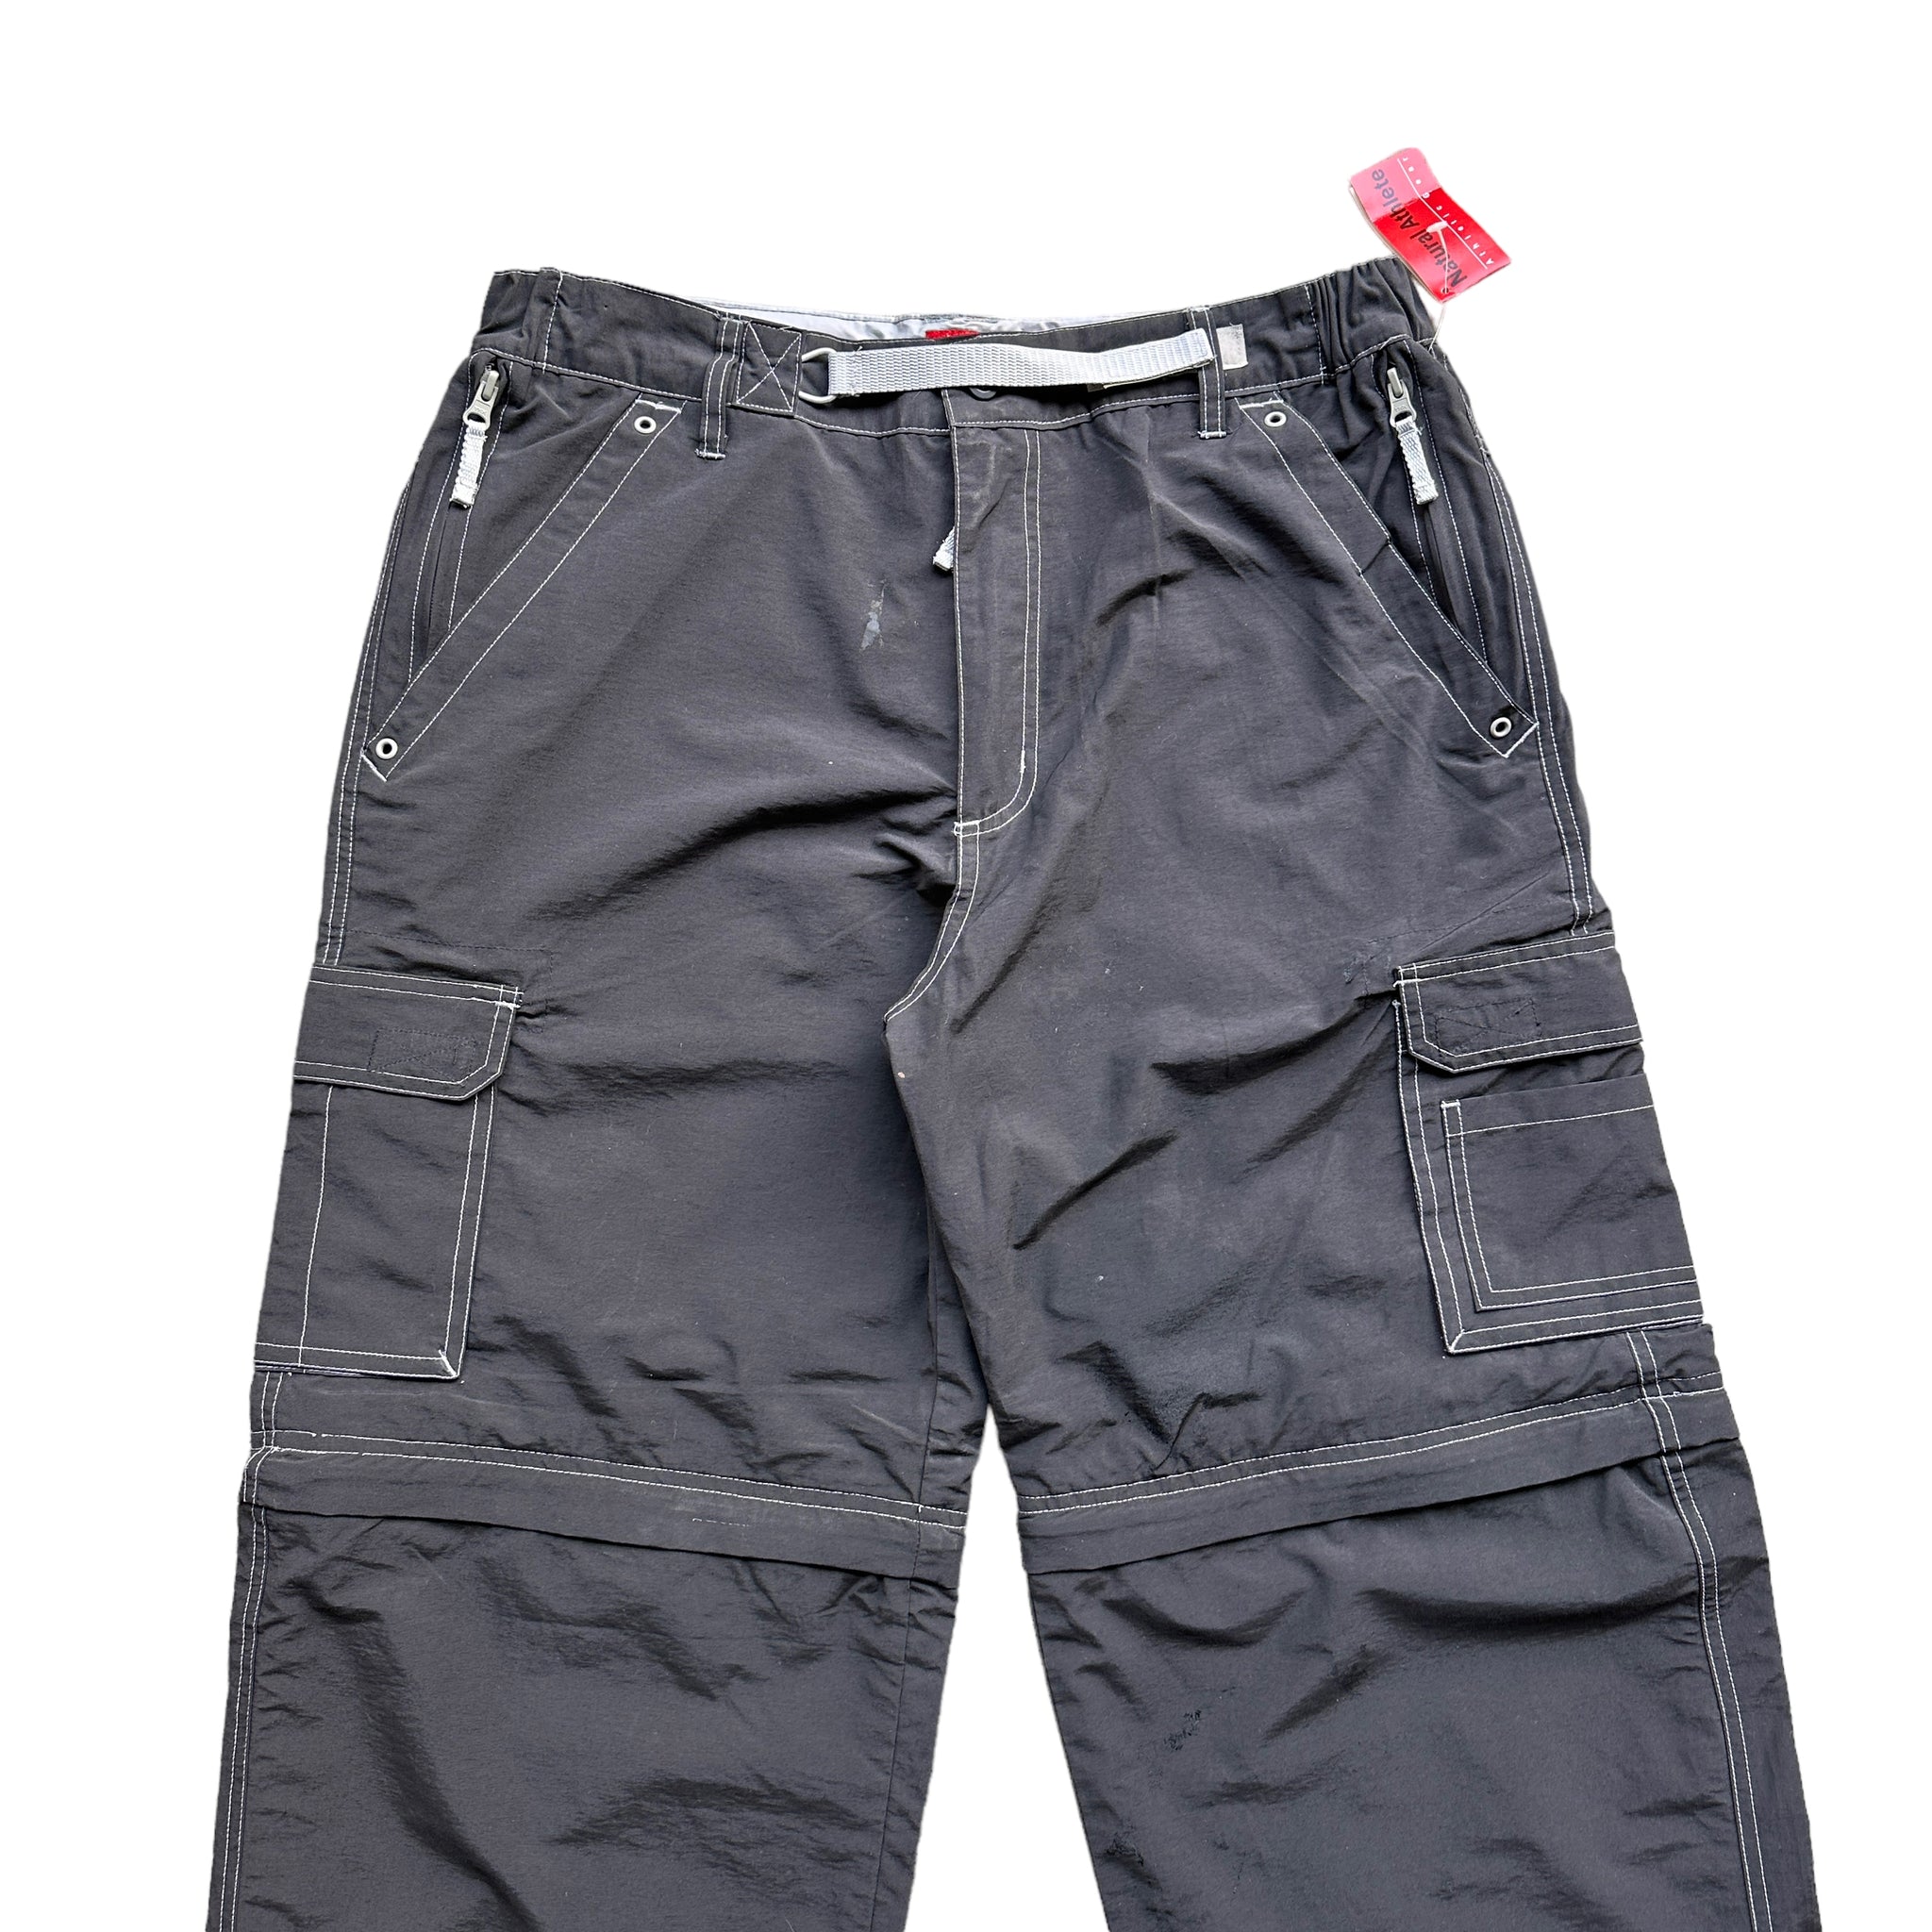 Technical y2k zip off nylon pants large